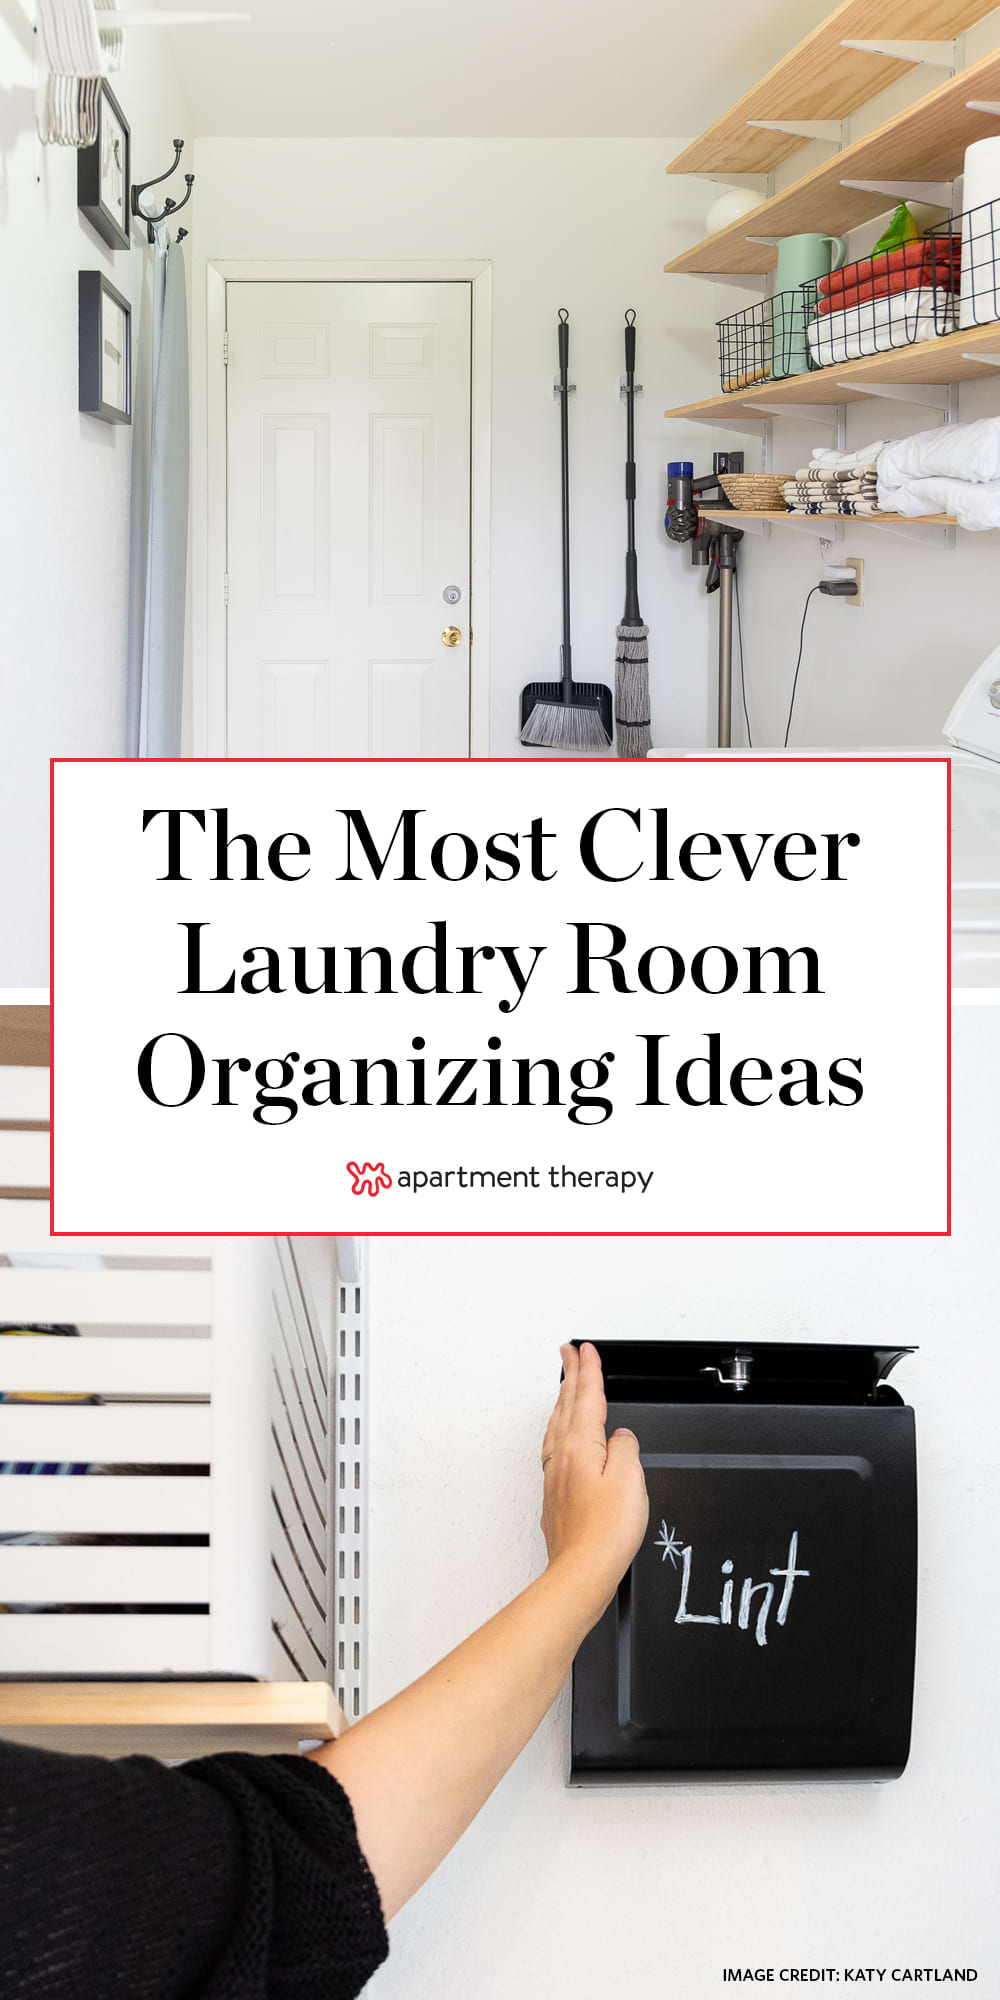 50 Dollar Store Laundry Room Organization Ideas - Prudent Penny